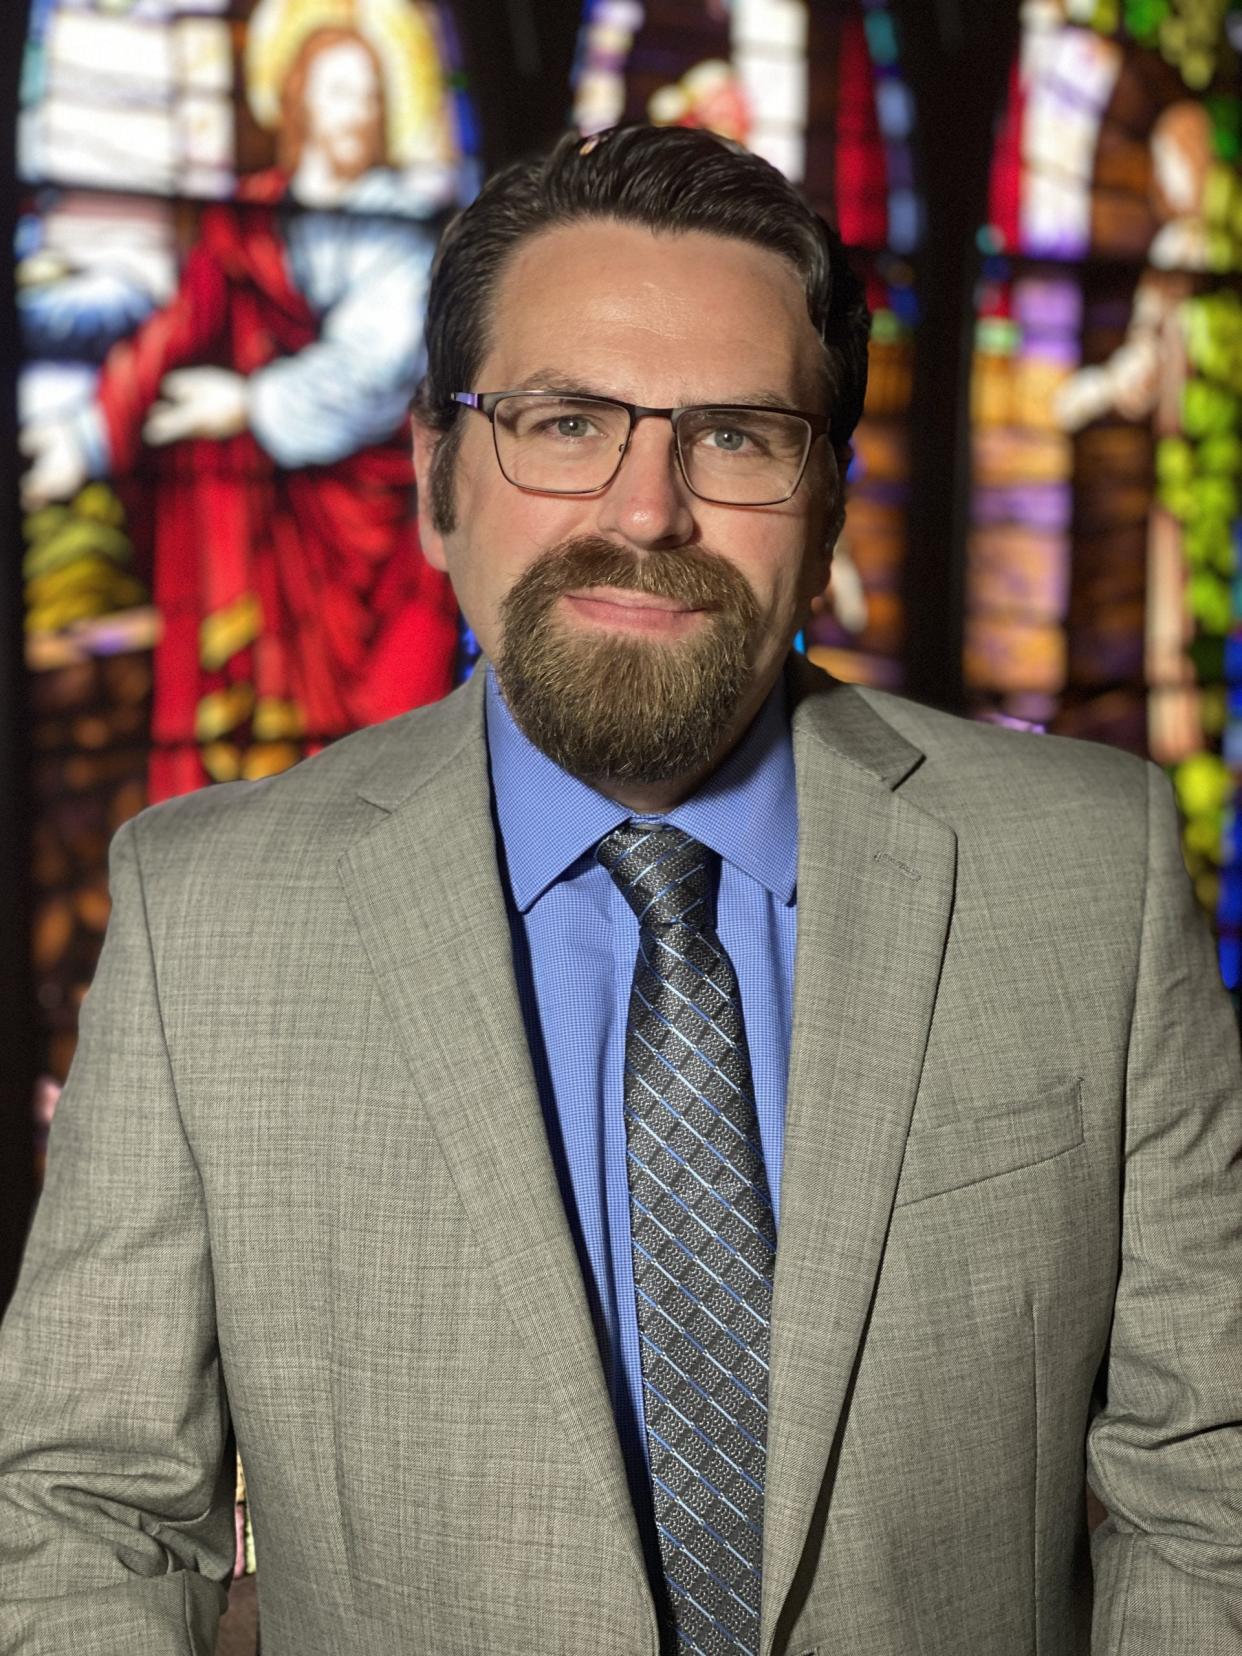 Jesse Brunette, executive director of St. John's Ministries